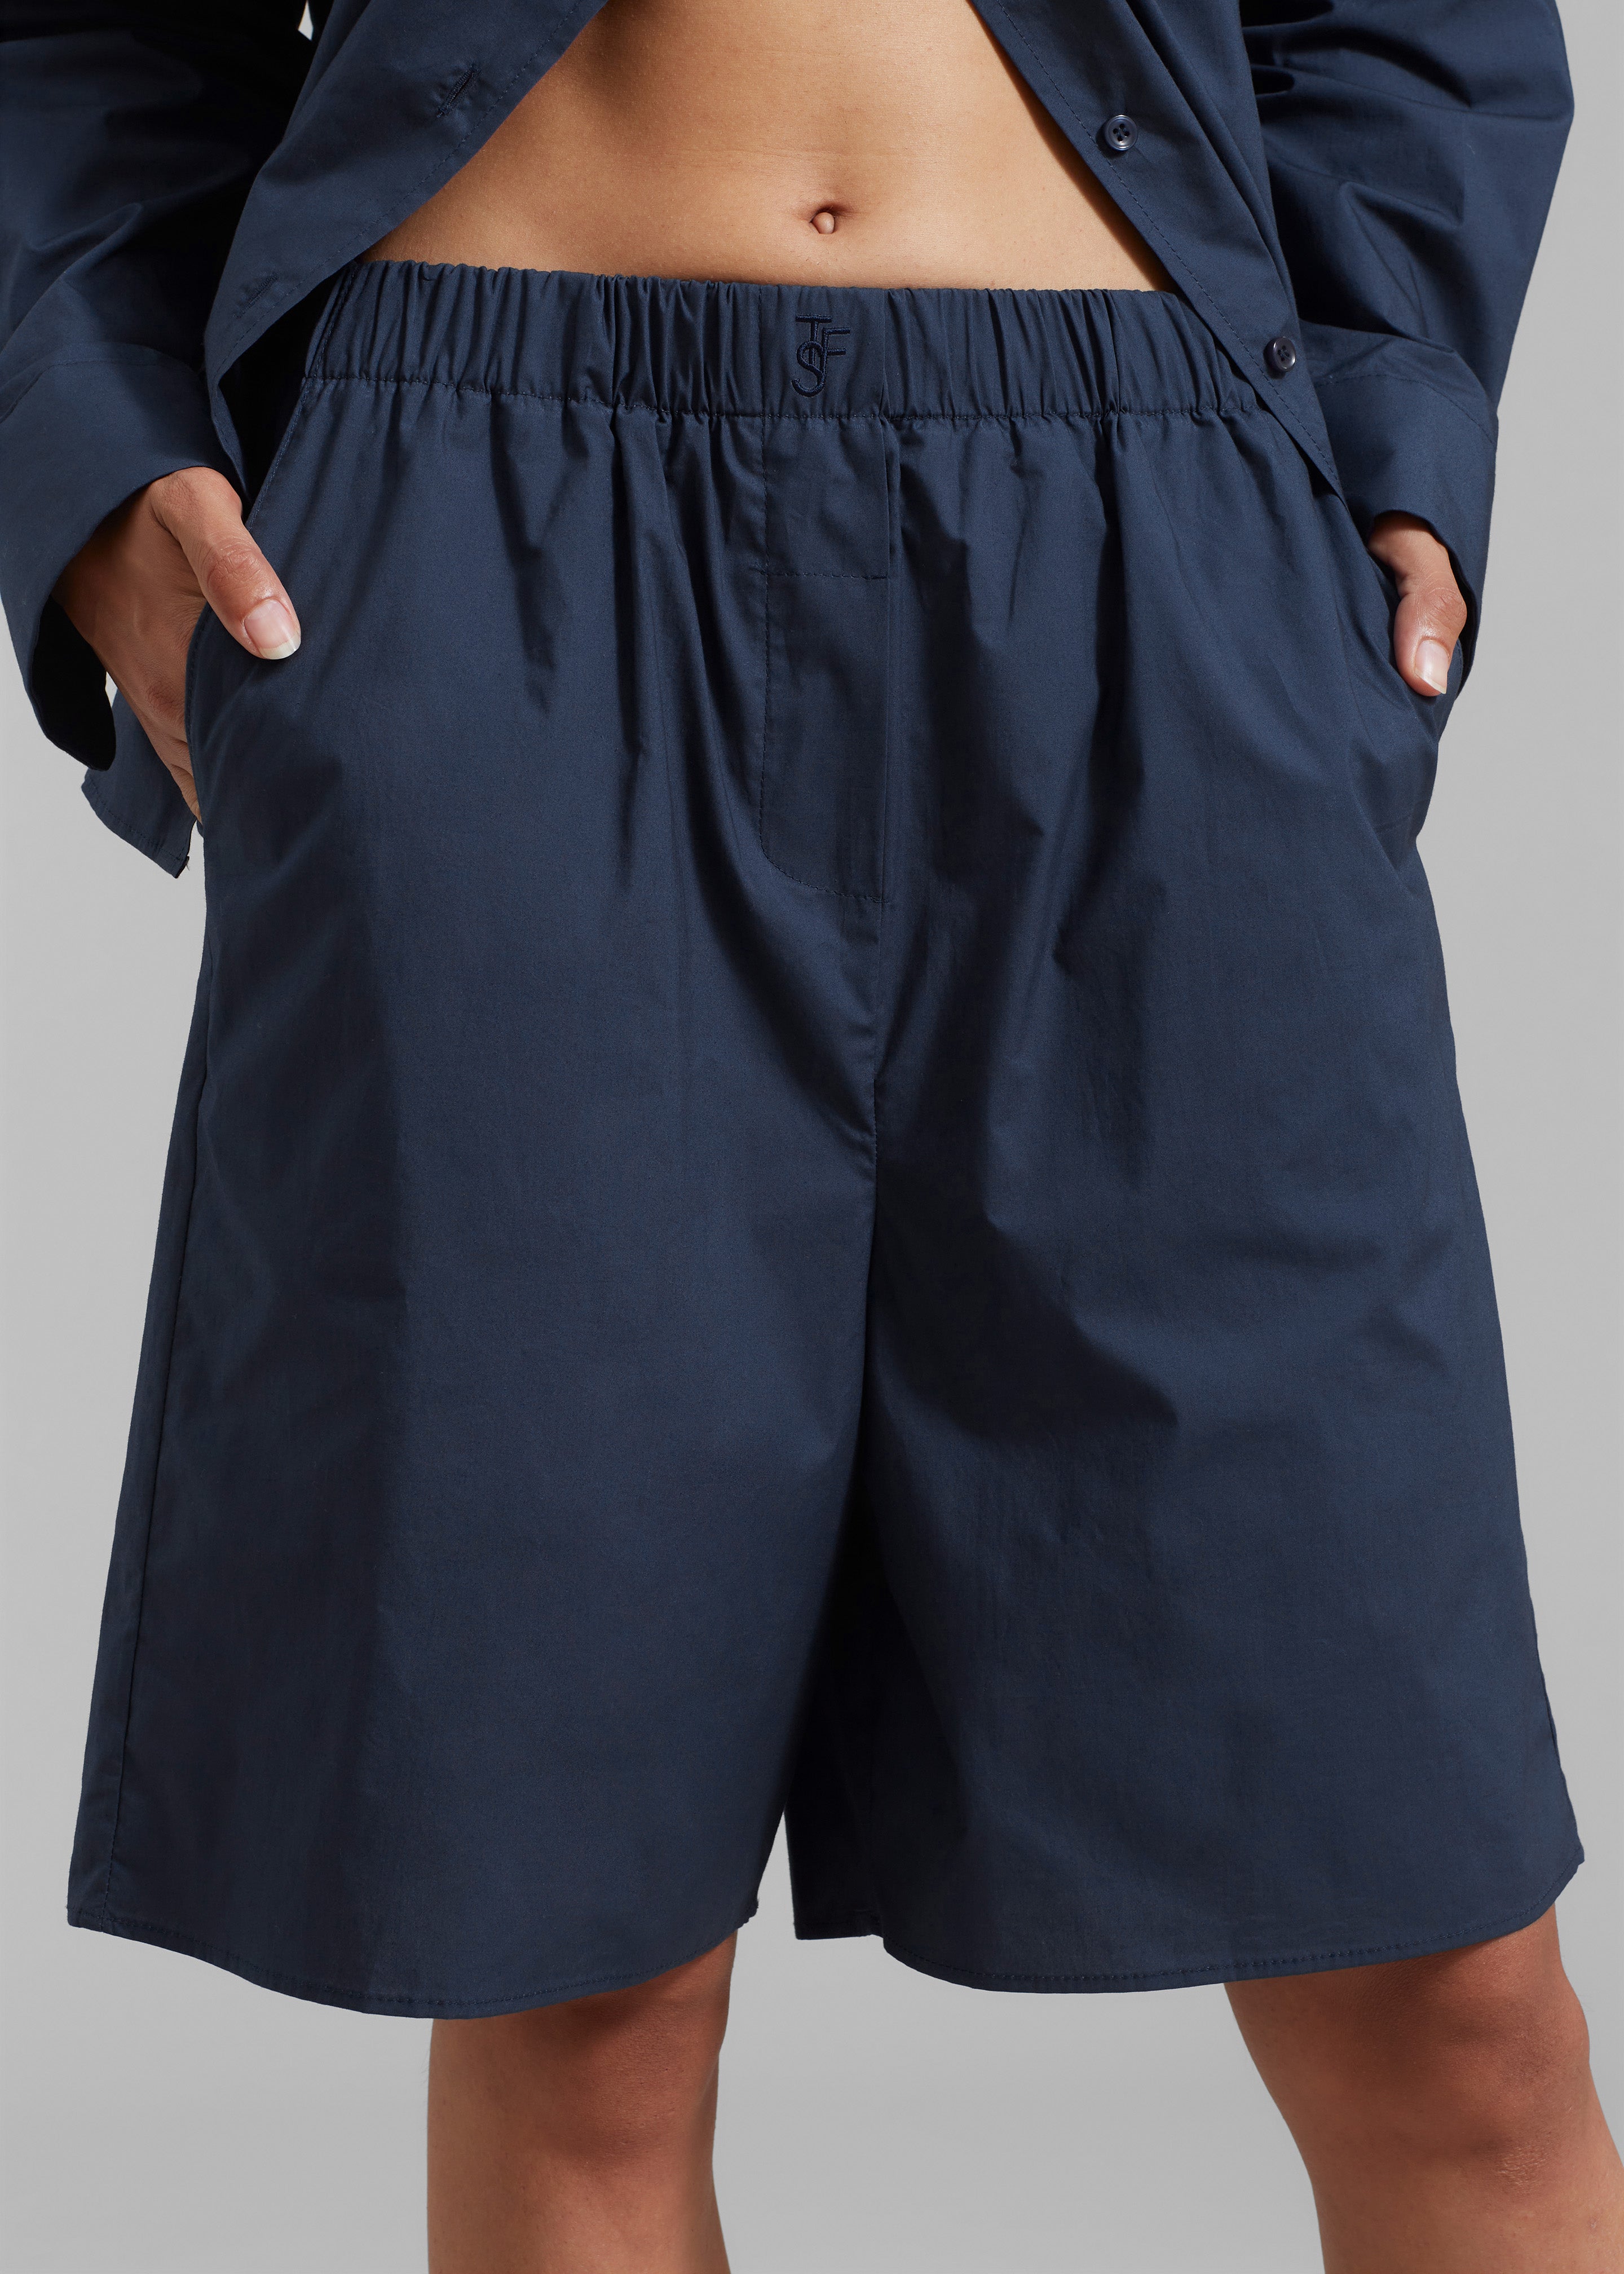 Levi Bermuda Shorts - Midnight Blue - 3